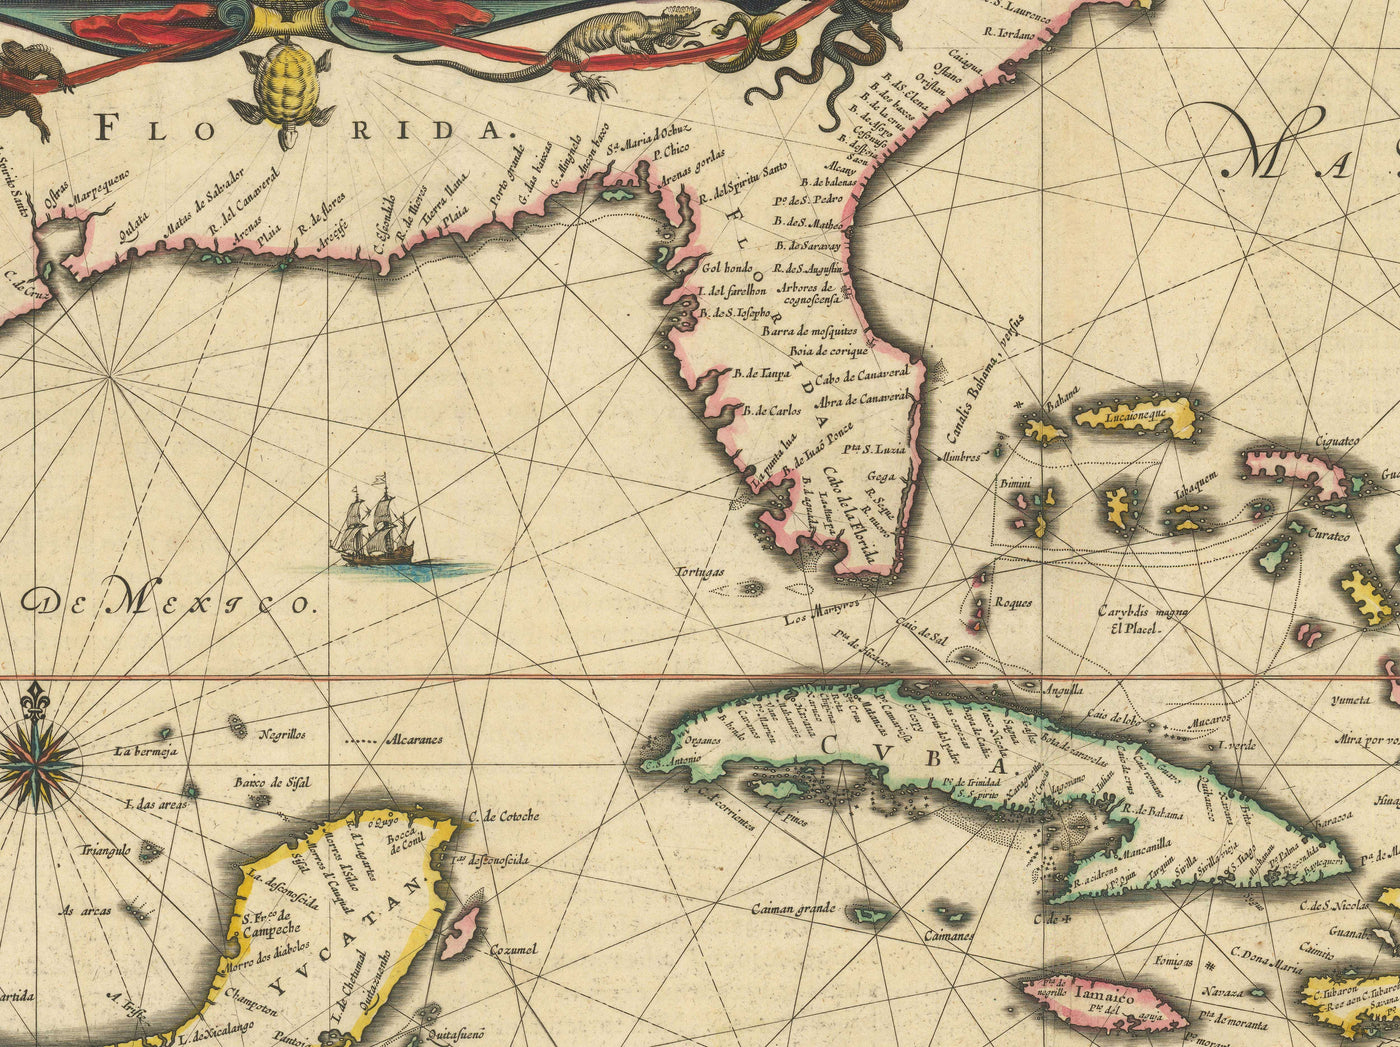 Alte Karte der Karibik im Jahre 1640 von Willem Blaeu - Kuba, Jamaika, Dominikanische Republik, Puerto Rico, Bahamas